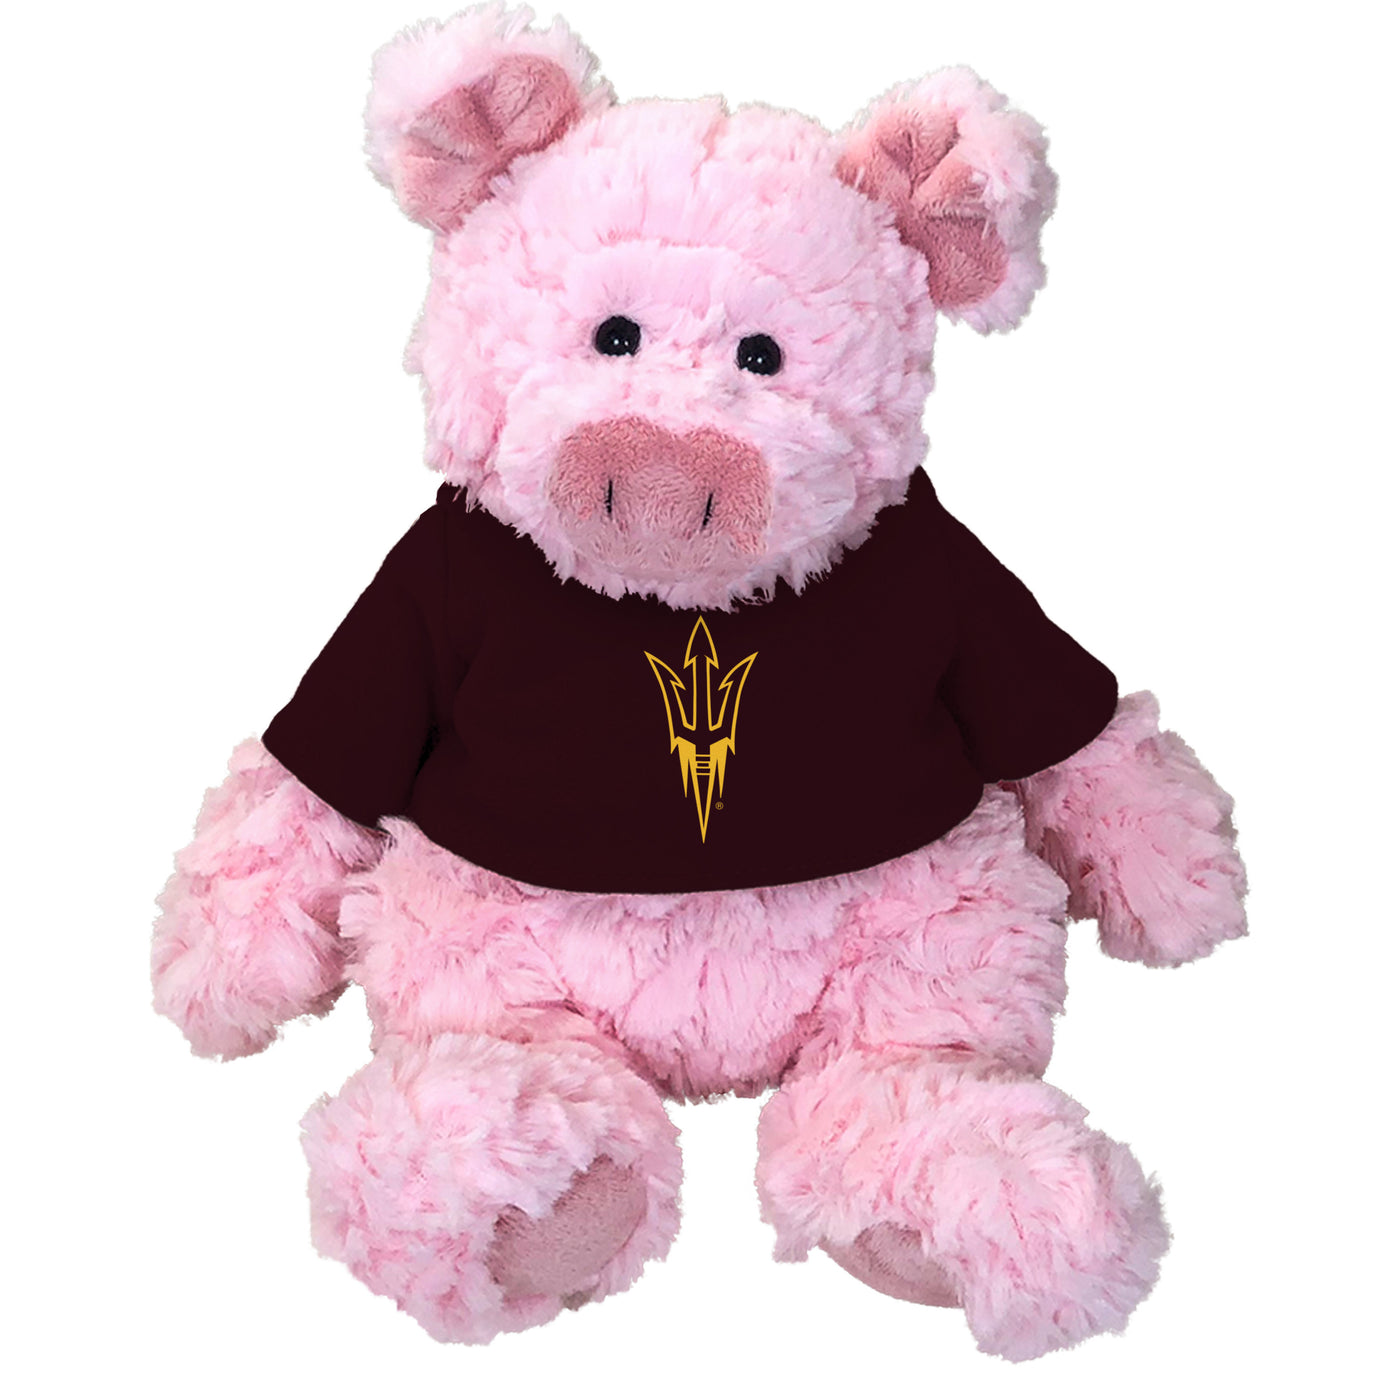 ASU Stuffed pink pig wearing a maroon shirt with the gold pitchfork logo. 